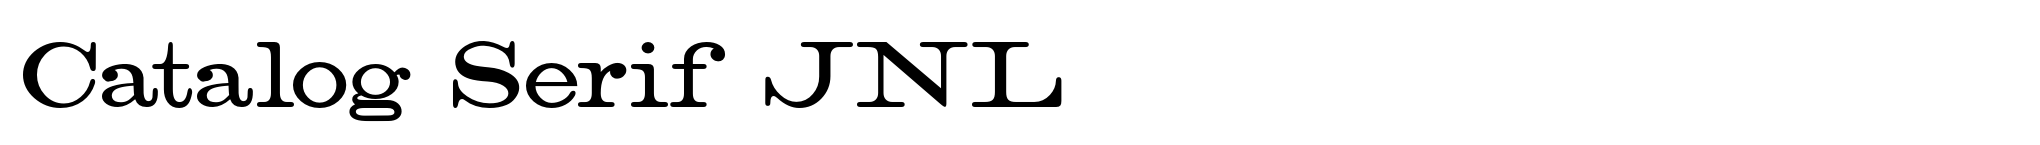 Catalog Serif JNL image